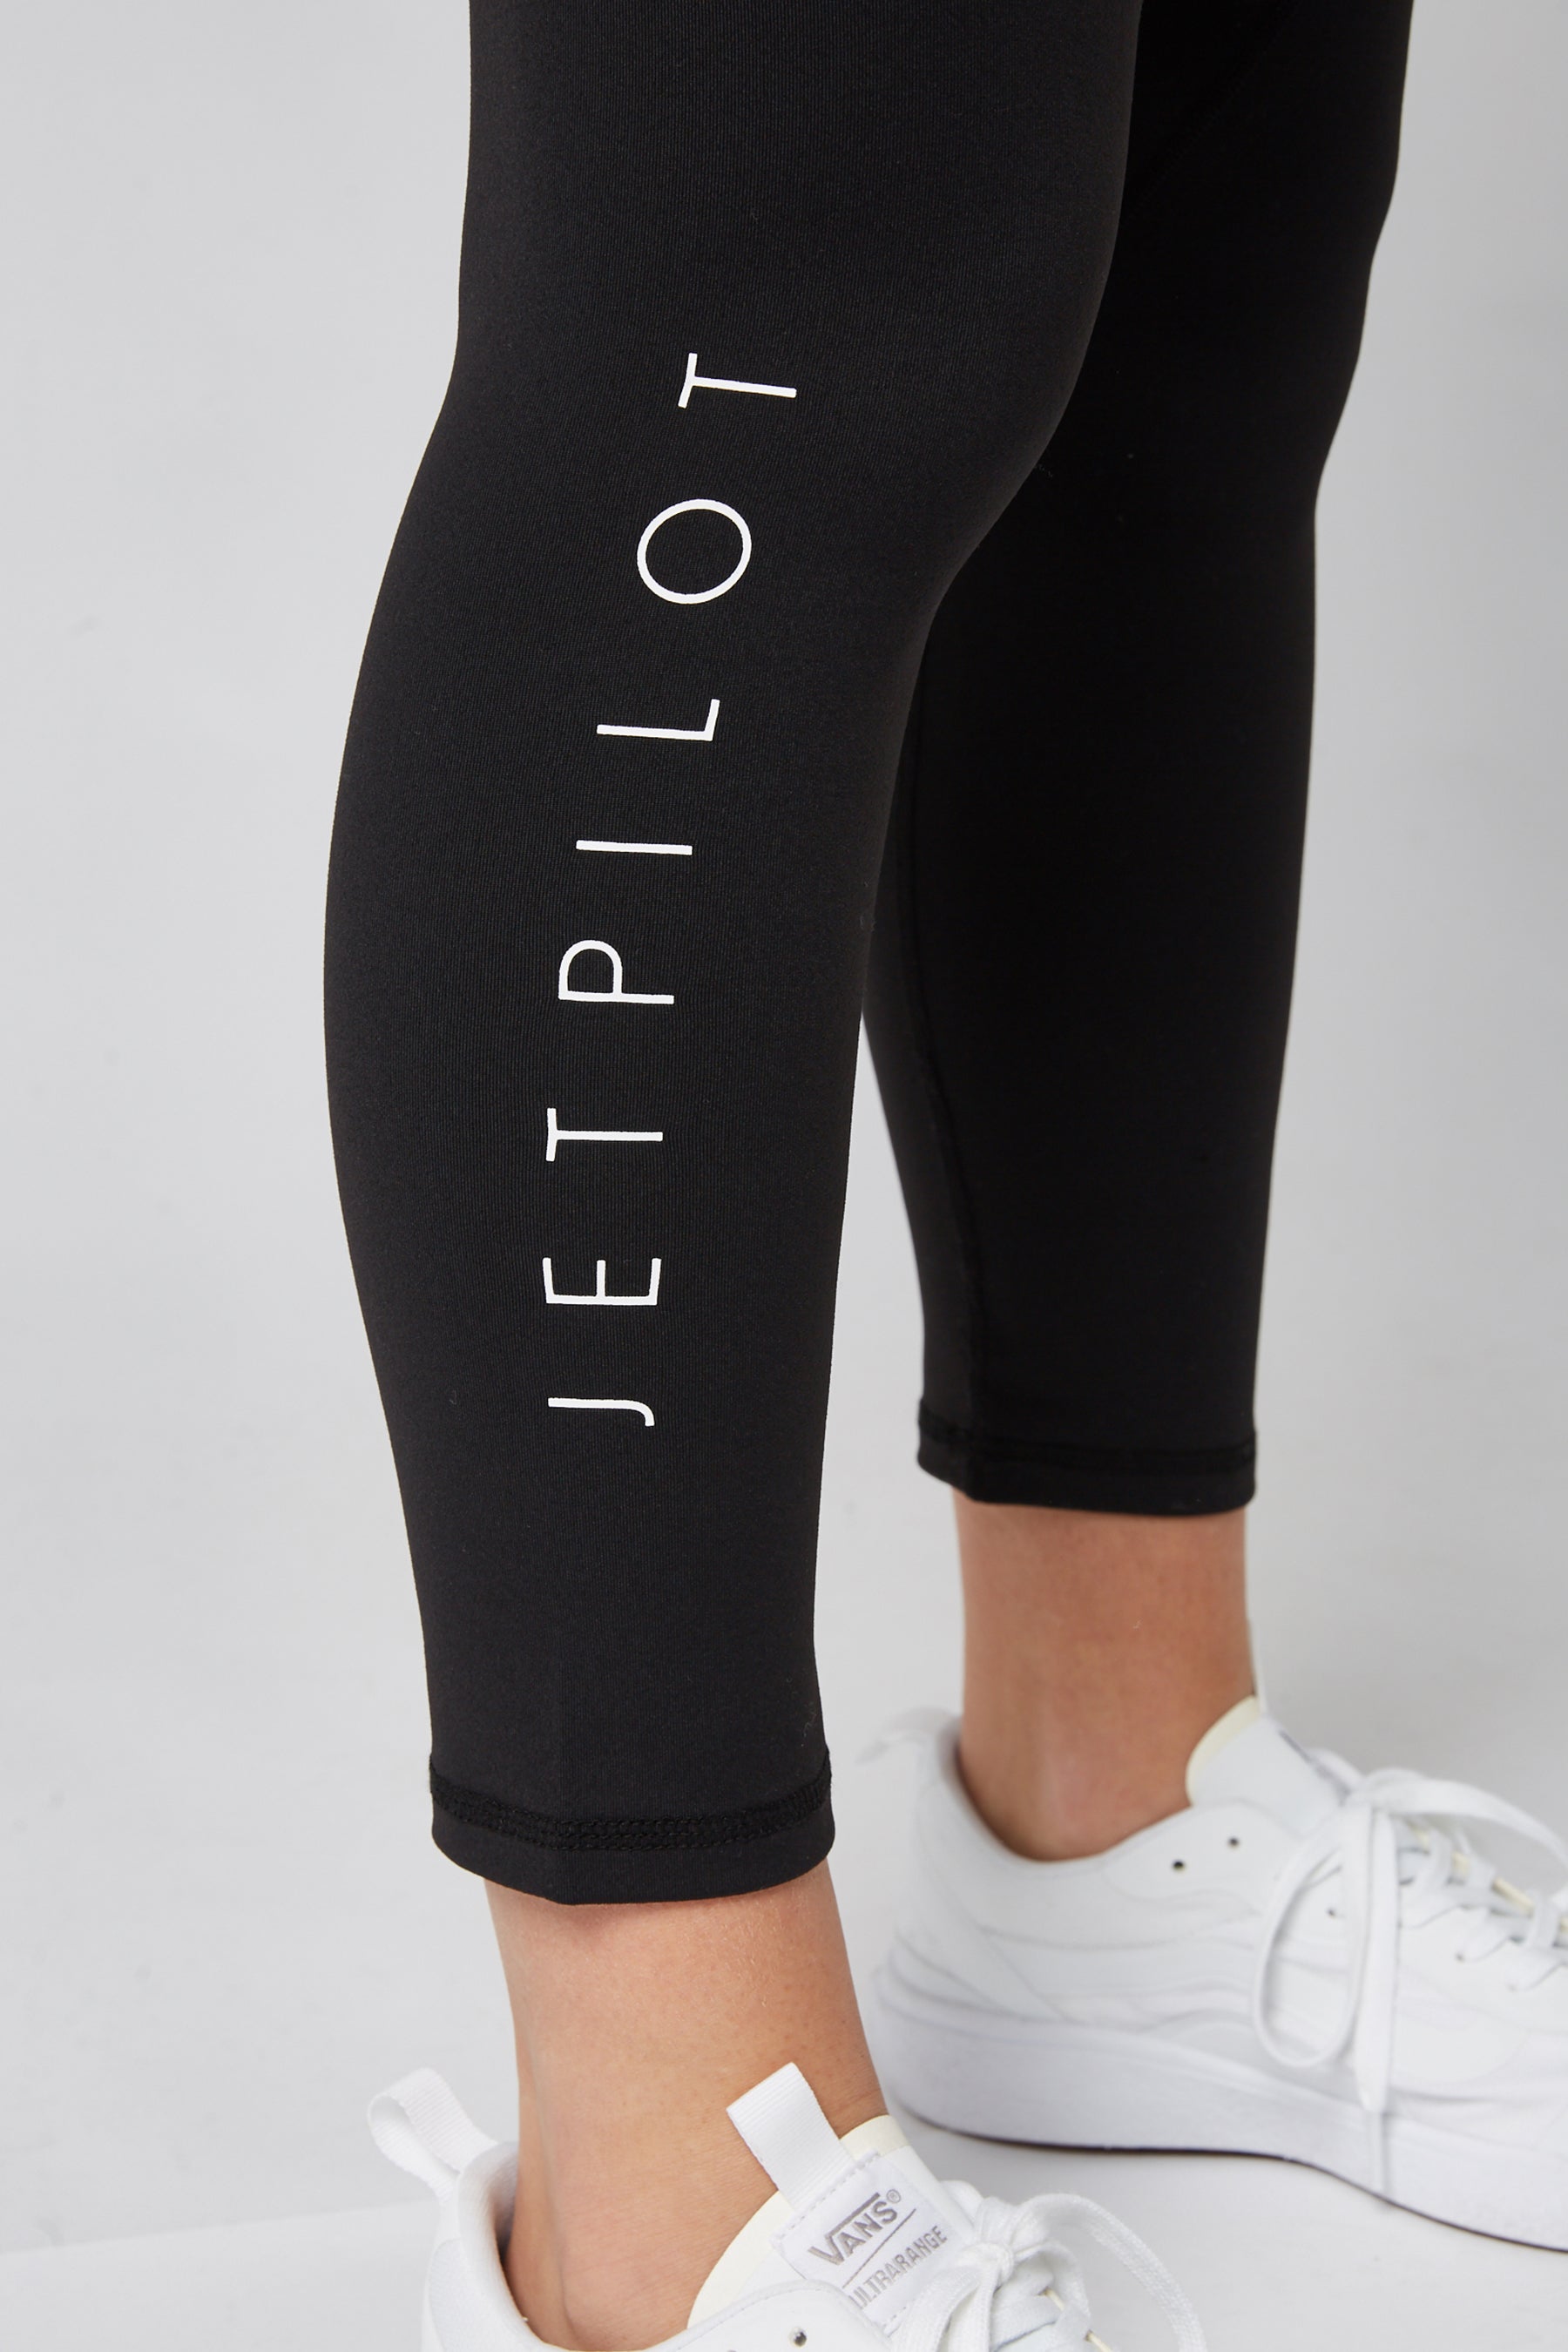 Jetpilot Simple Ladies Leggings w/ Pockets - Black